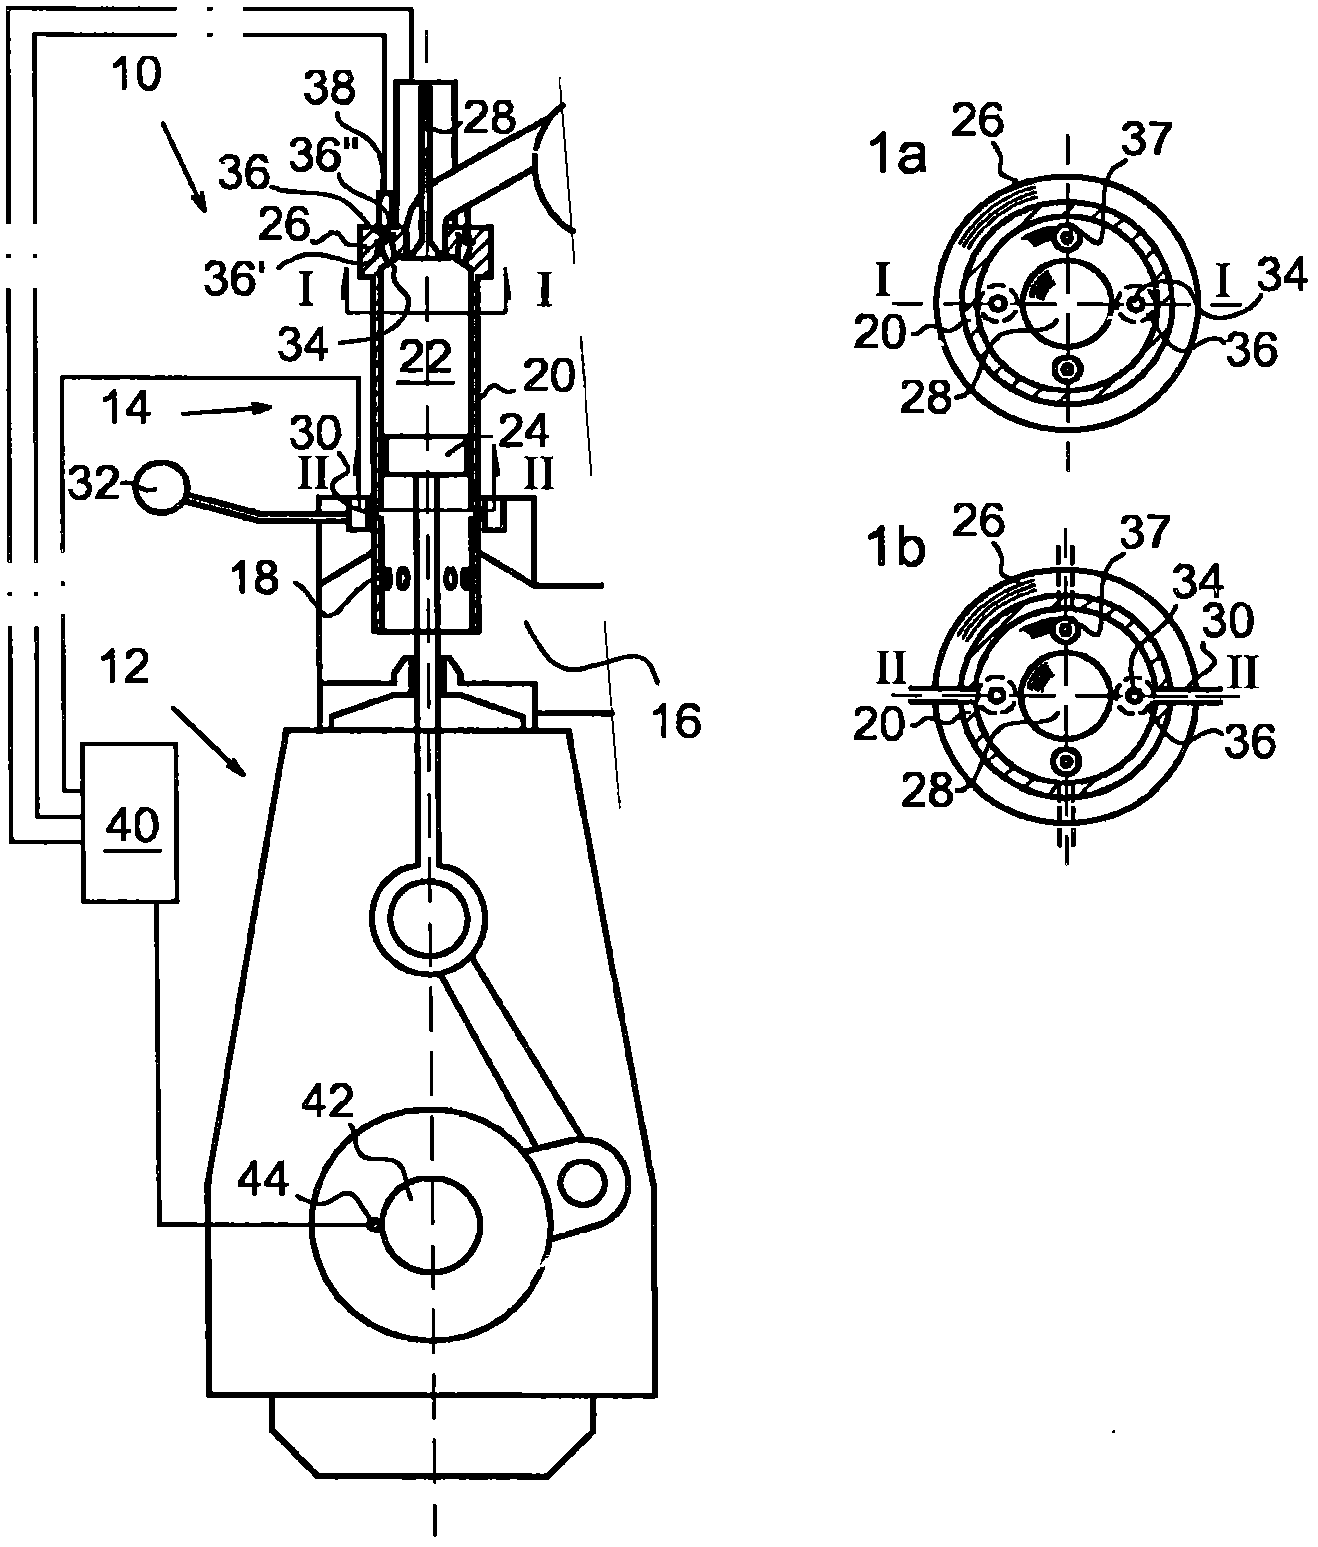 Two-stroke internal combustion engine, method of operating two-stroke internal combustion engine and method of converting two-stroke engine